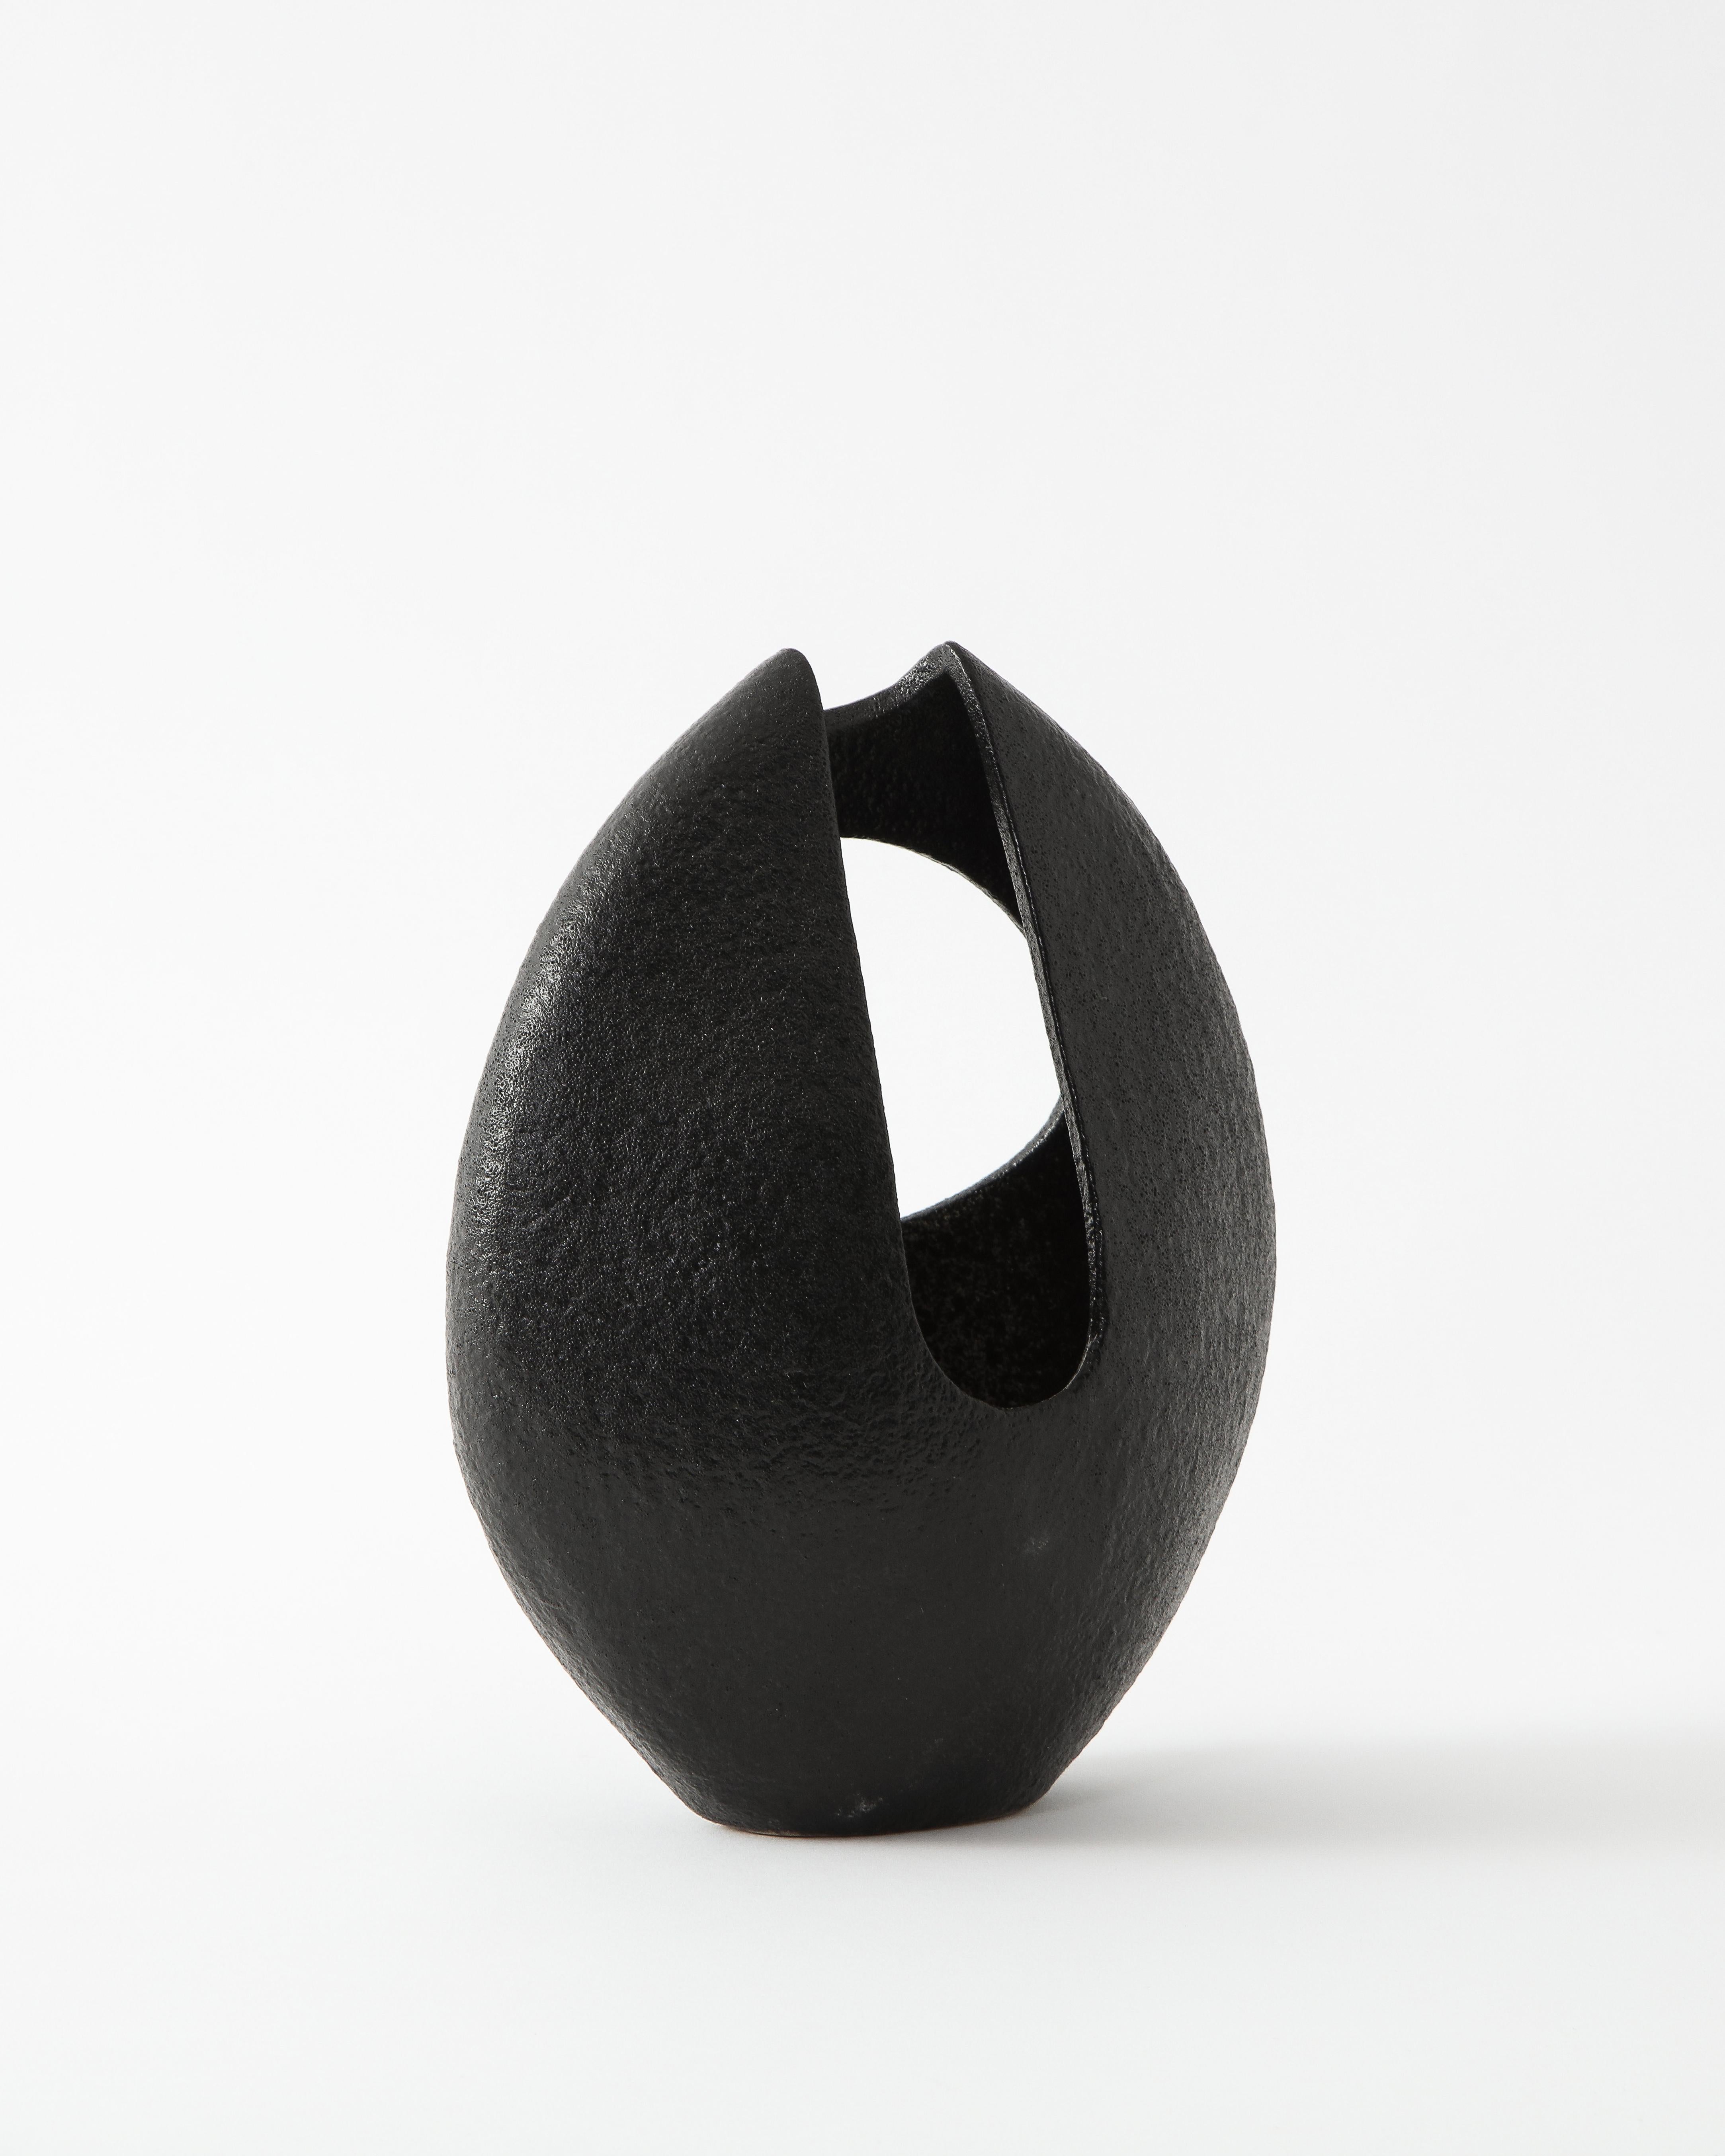 Asian Asymmetrical Almond-Shaped Black Textured Japanese Ceramic Vessel